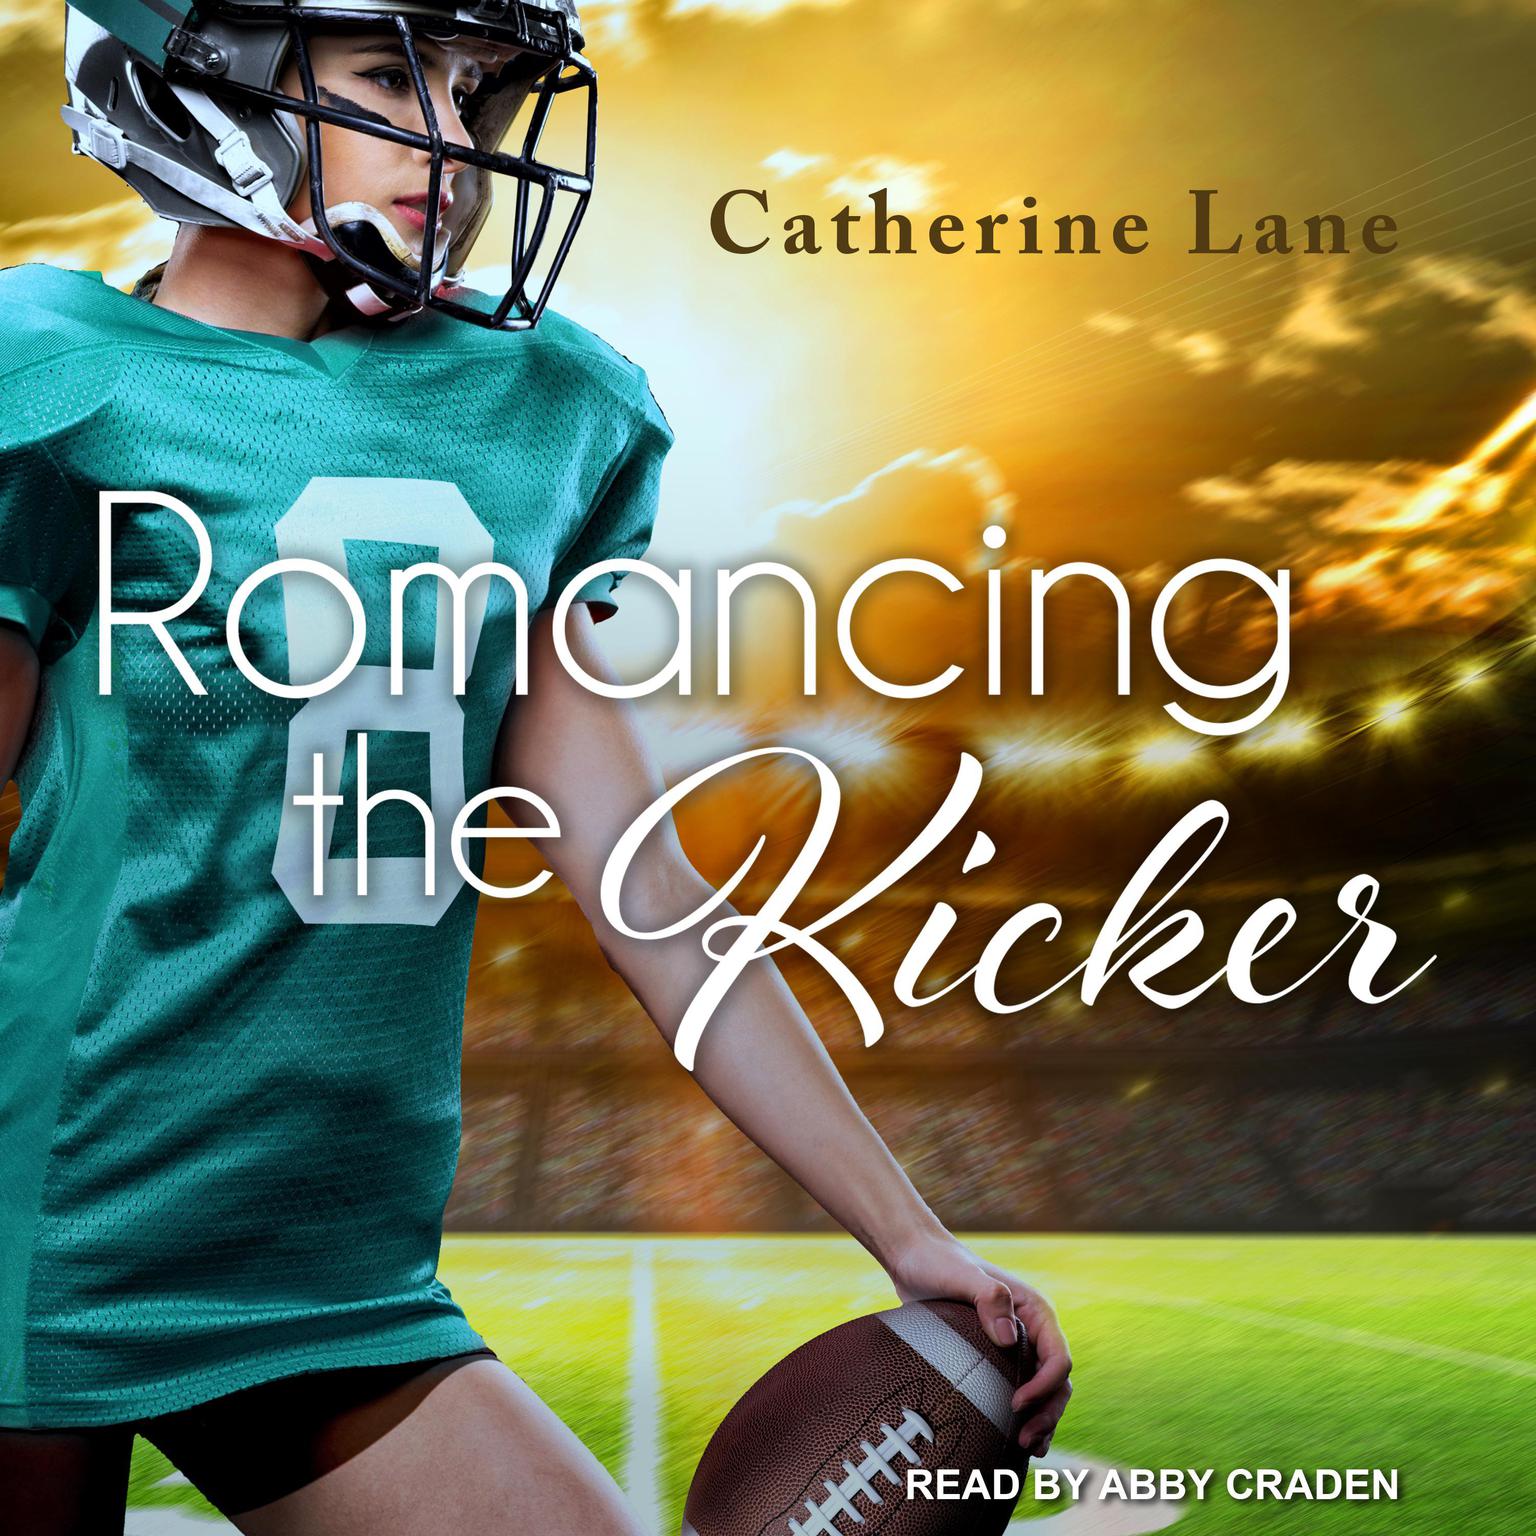 Abby Craden, Catherine Lane: Romancing the Kicker (AudiobookFormat, 2020, Tantor Audio)